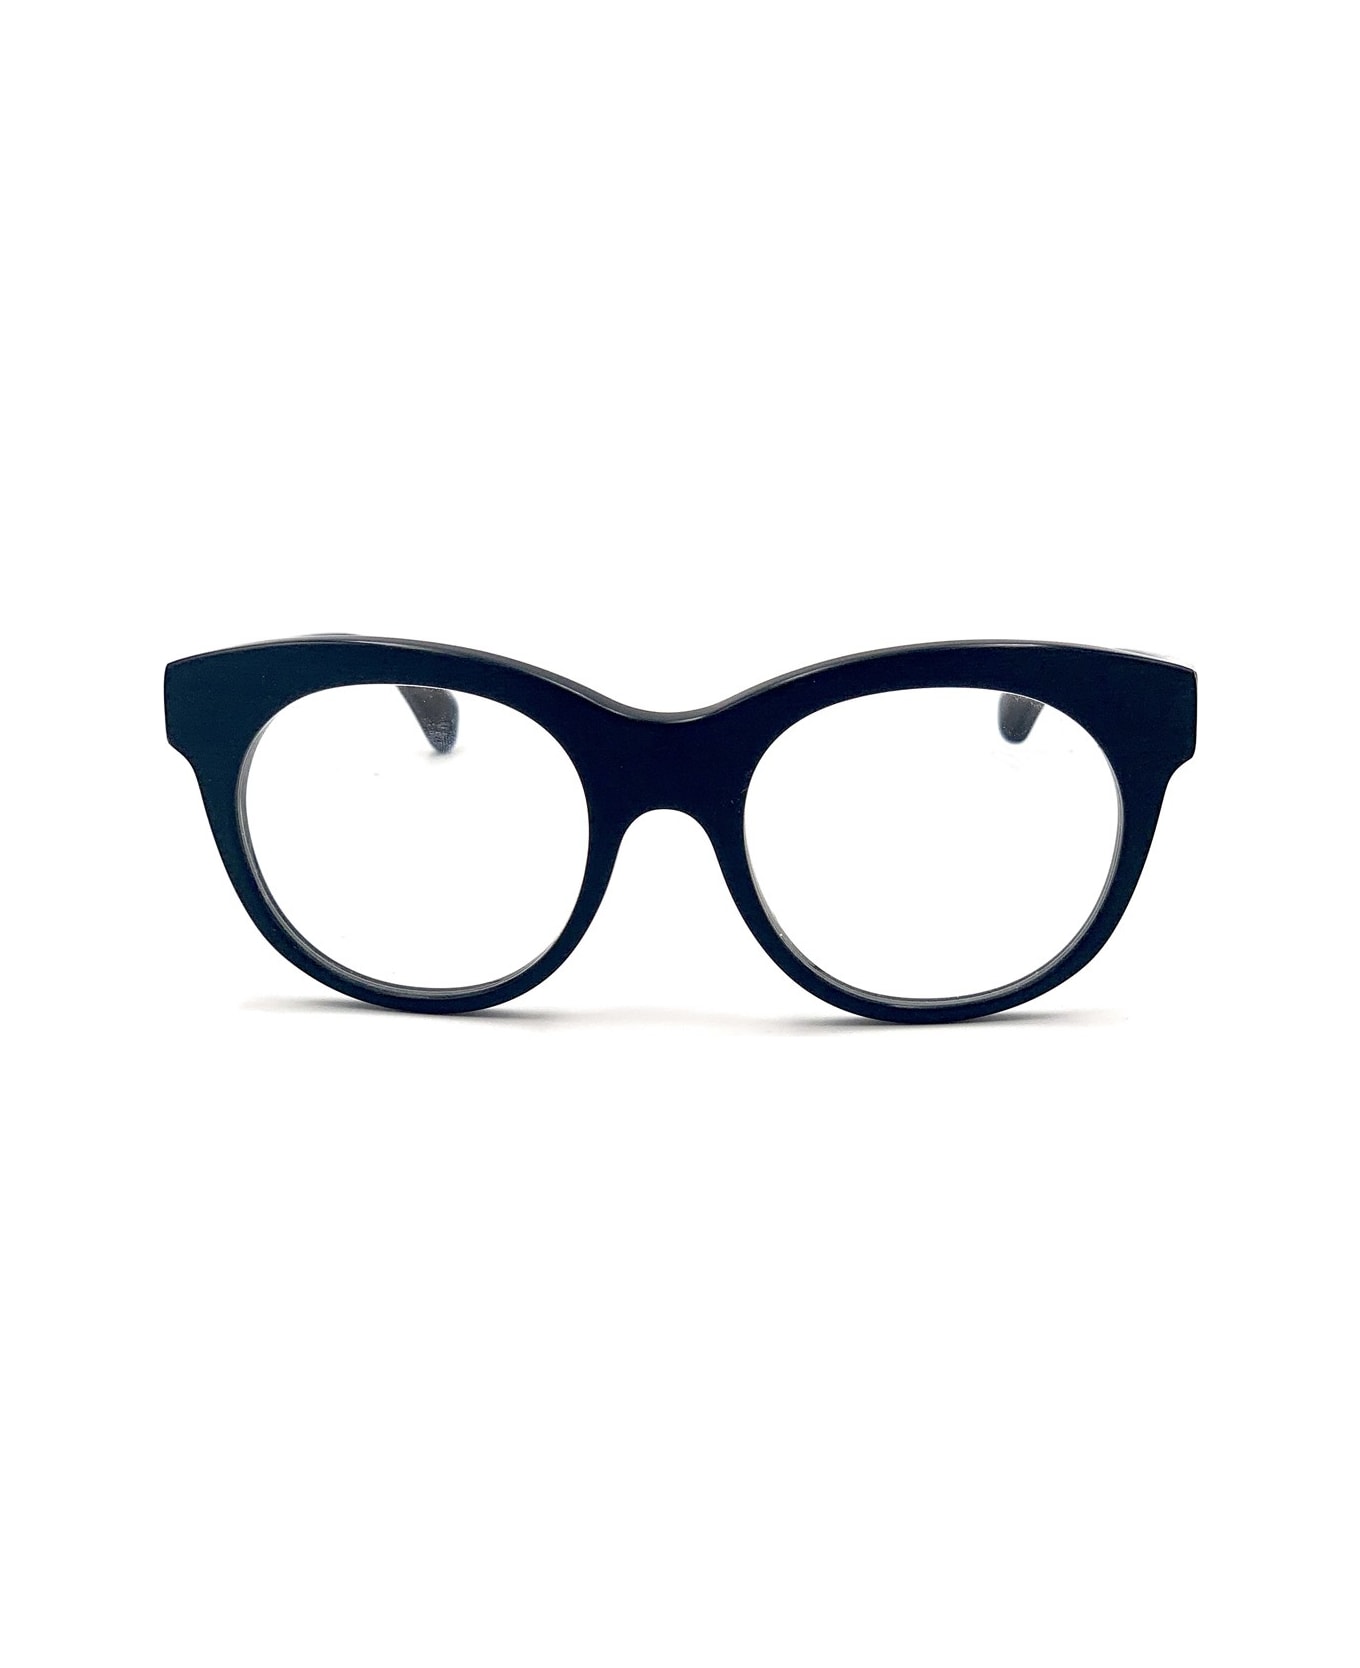 Jacques Durand Port-cros Xl170 Glasses - Nero